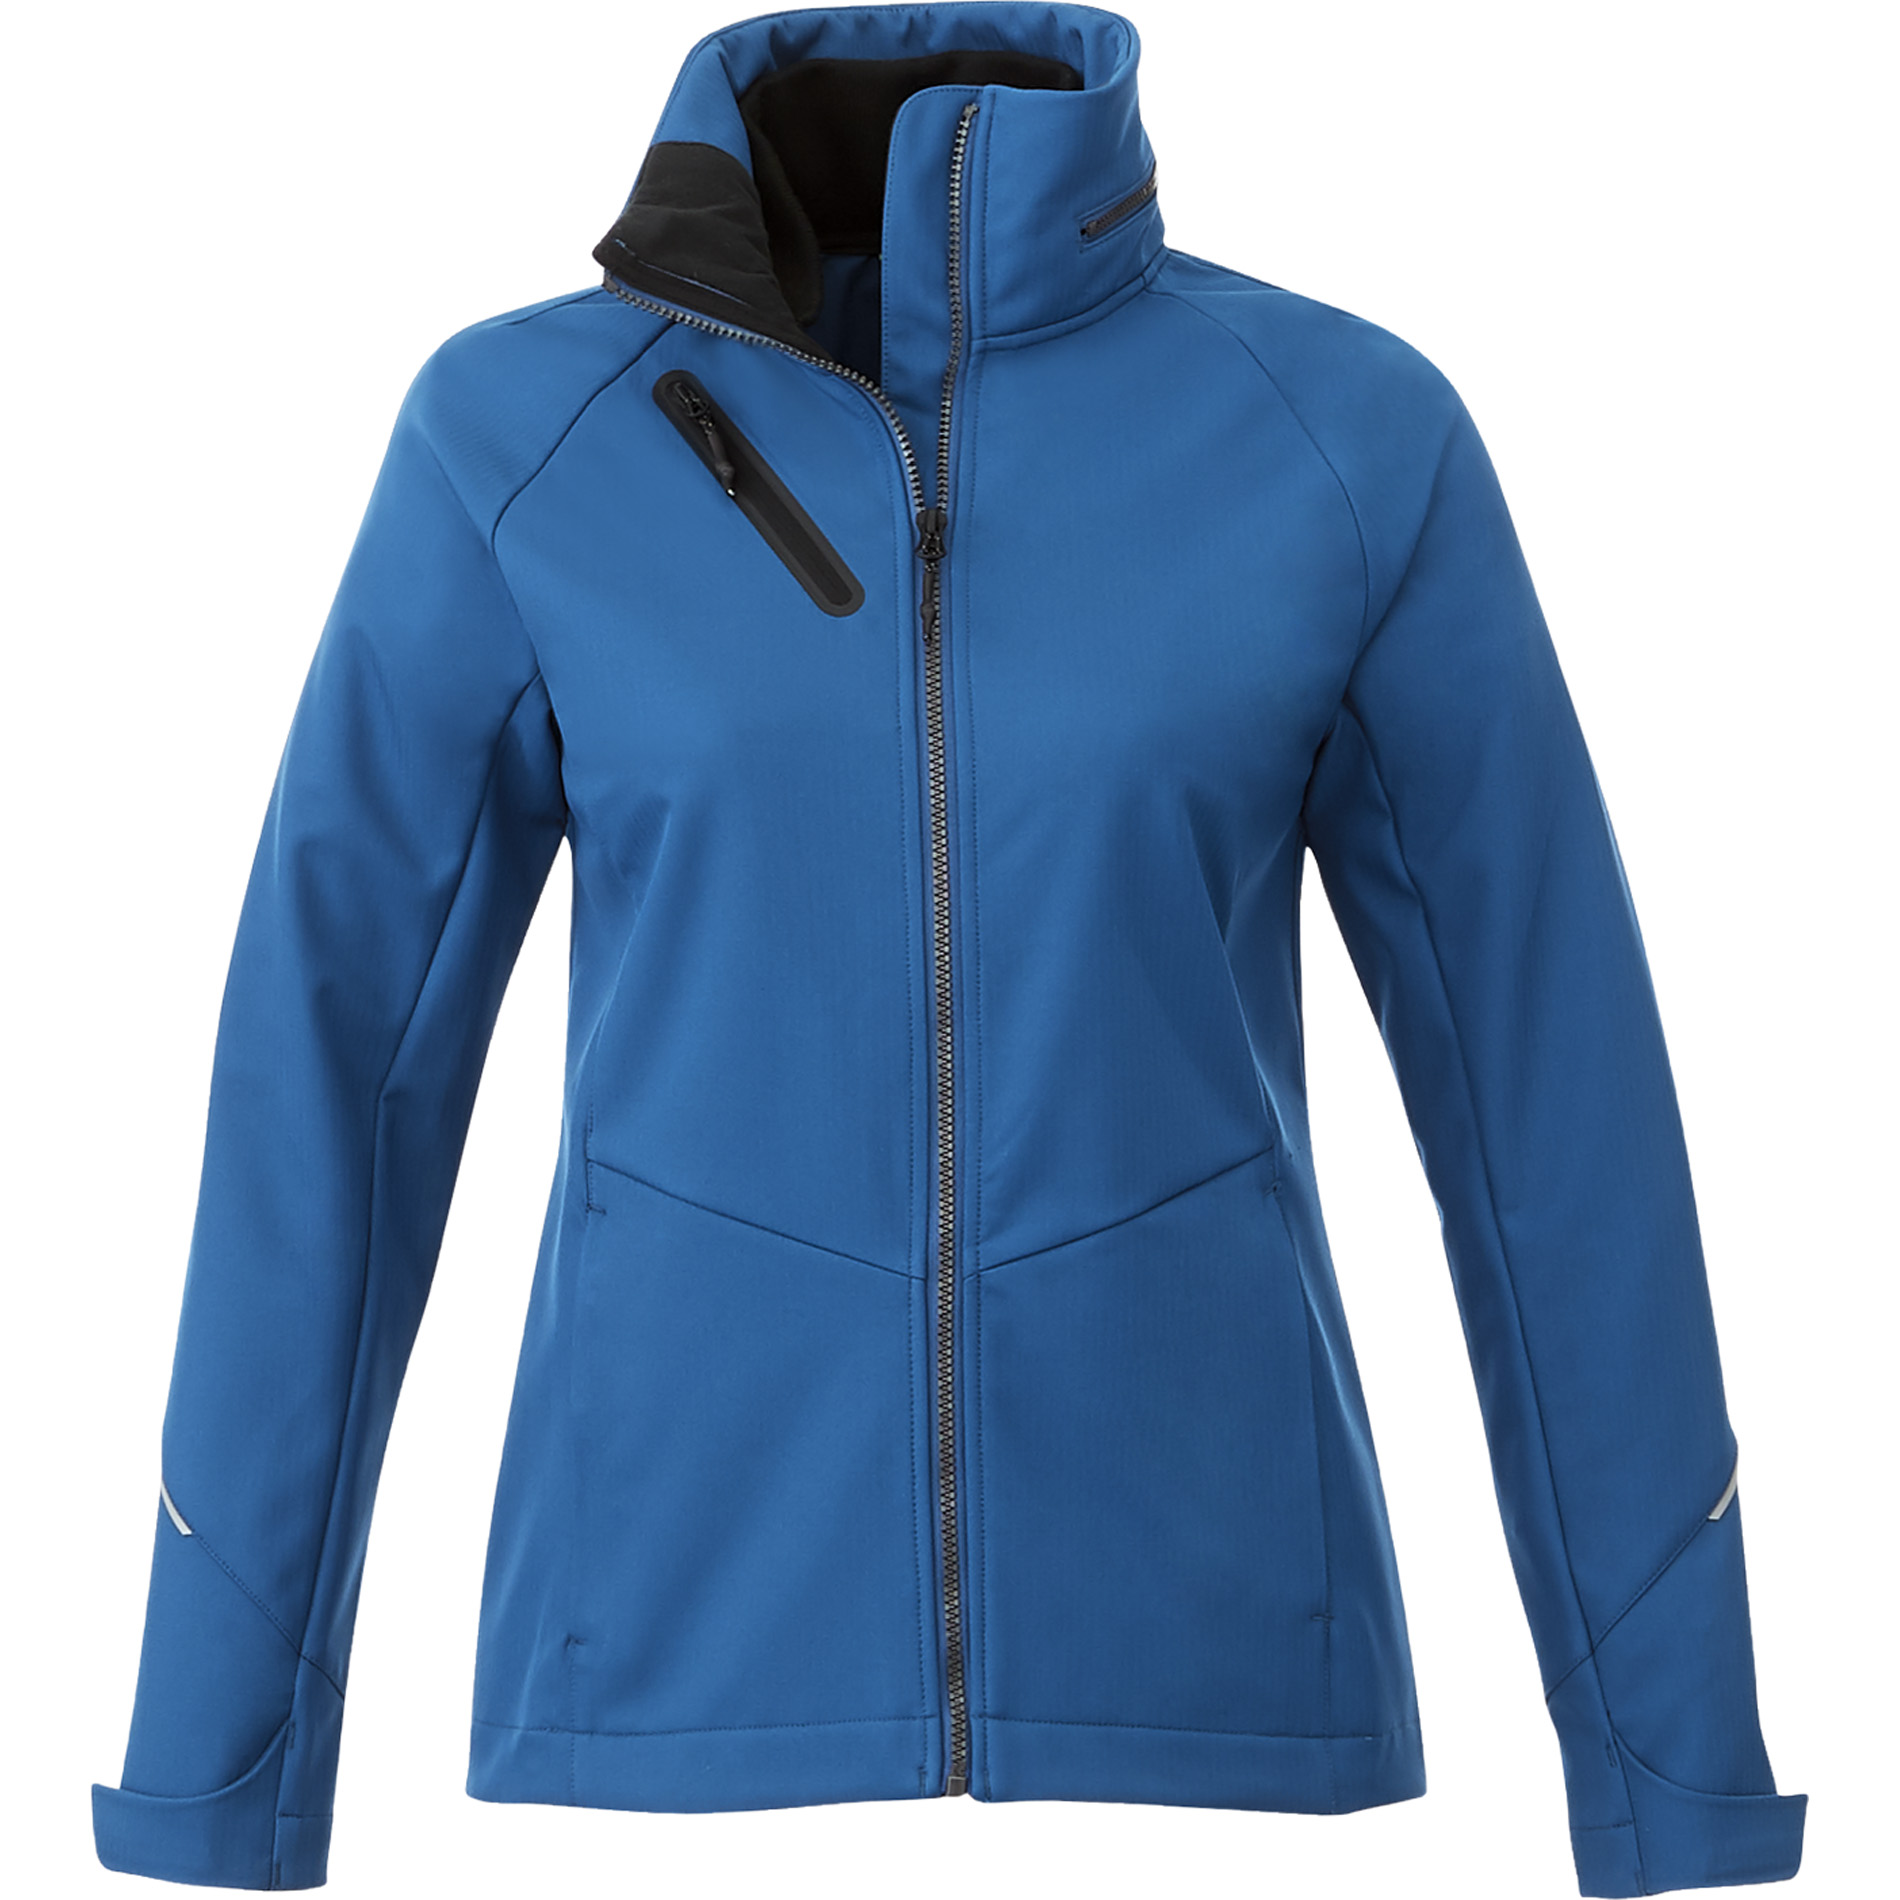 Trimark TM92907 - Women's PEYTO Softshell Jacket